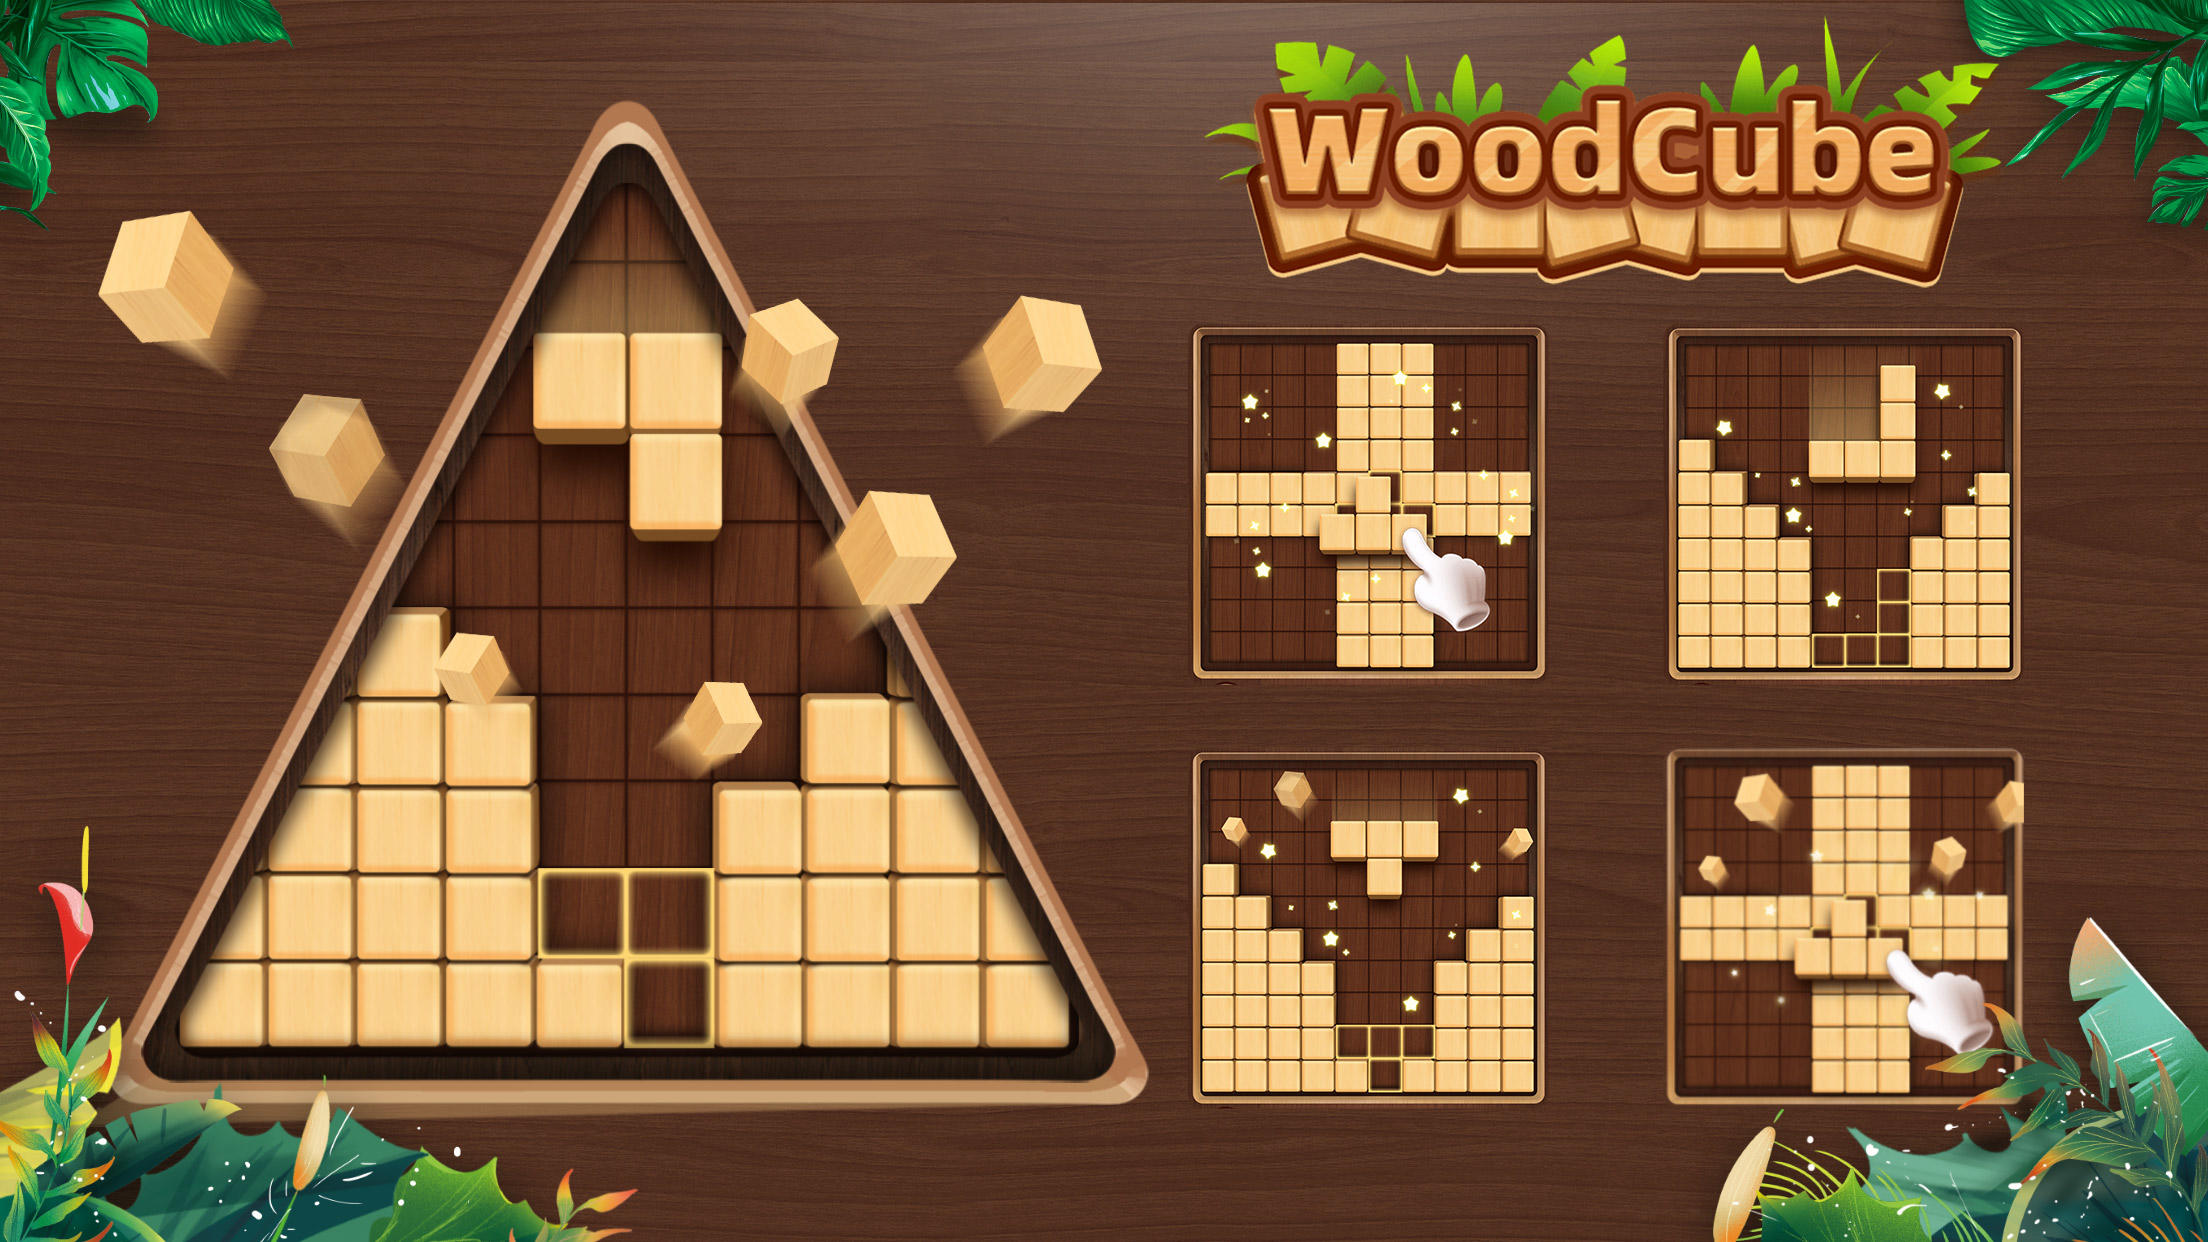 Screenshot 1 of WoodCube - Câu đố về gỗ 3.386